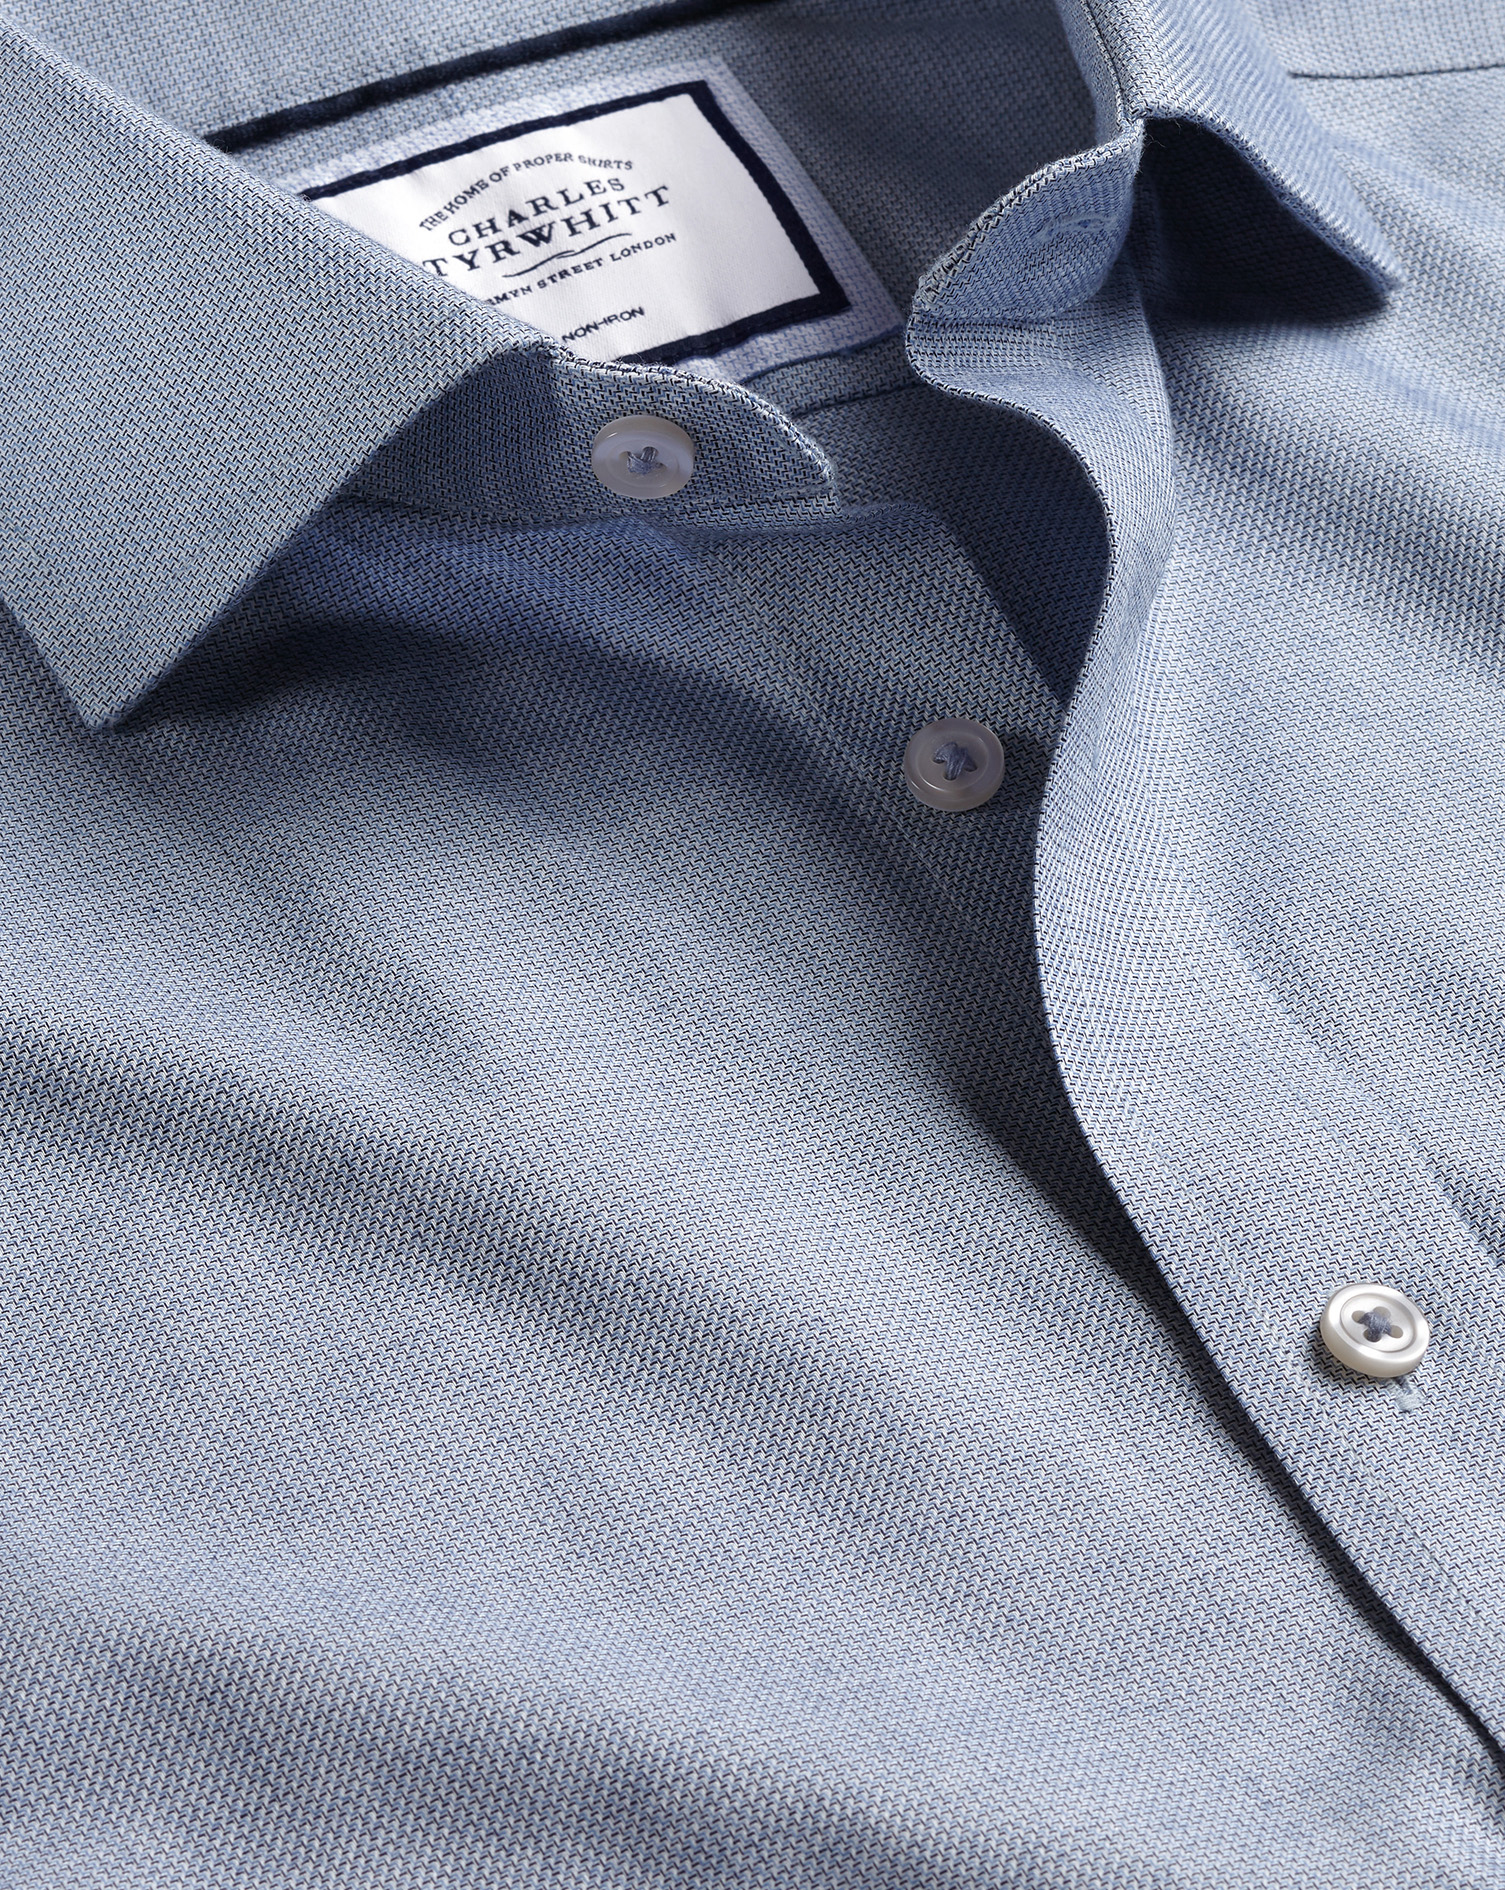 Men's Charles Tyrwhitt Cutaway Collar Non-Iron Richmond Weave Dress Shirt - Indigo Blue French Cuff 